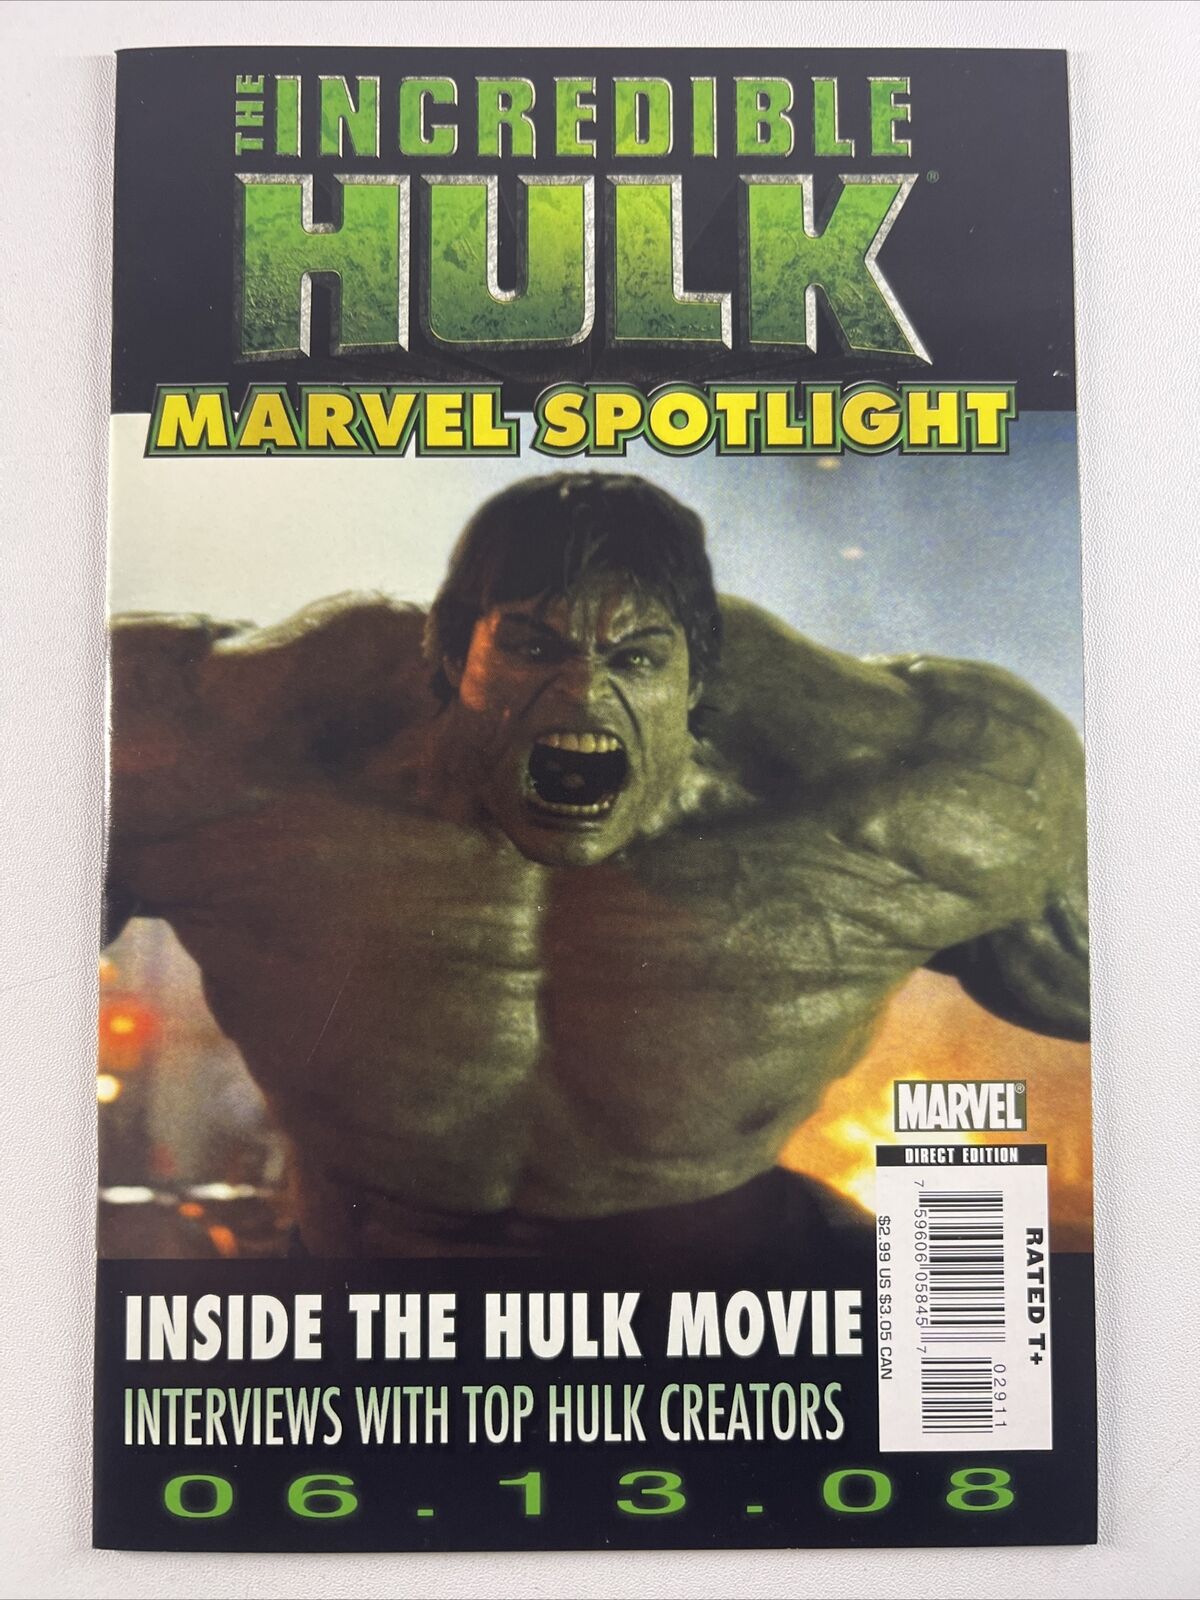 Marvel Spotlight: The Incredible Hulk (2008) Photo Cover | Marvel Comics